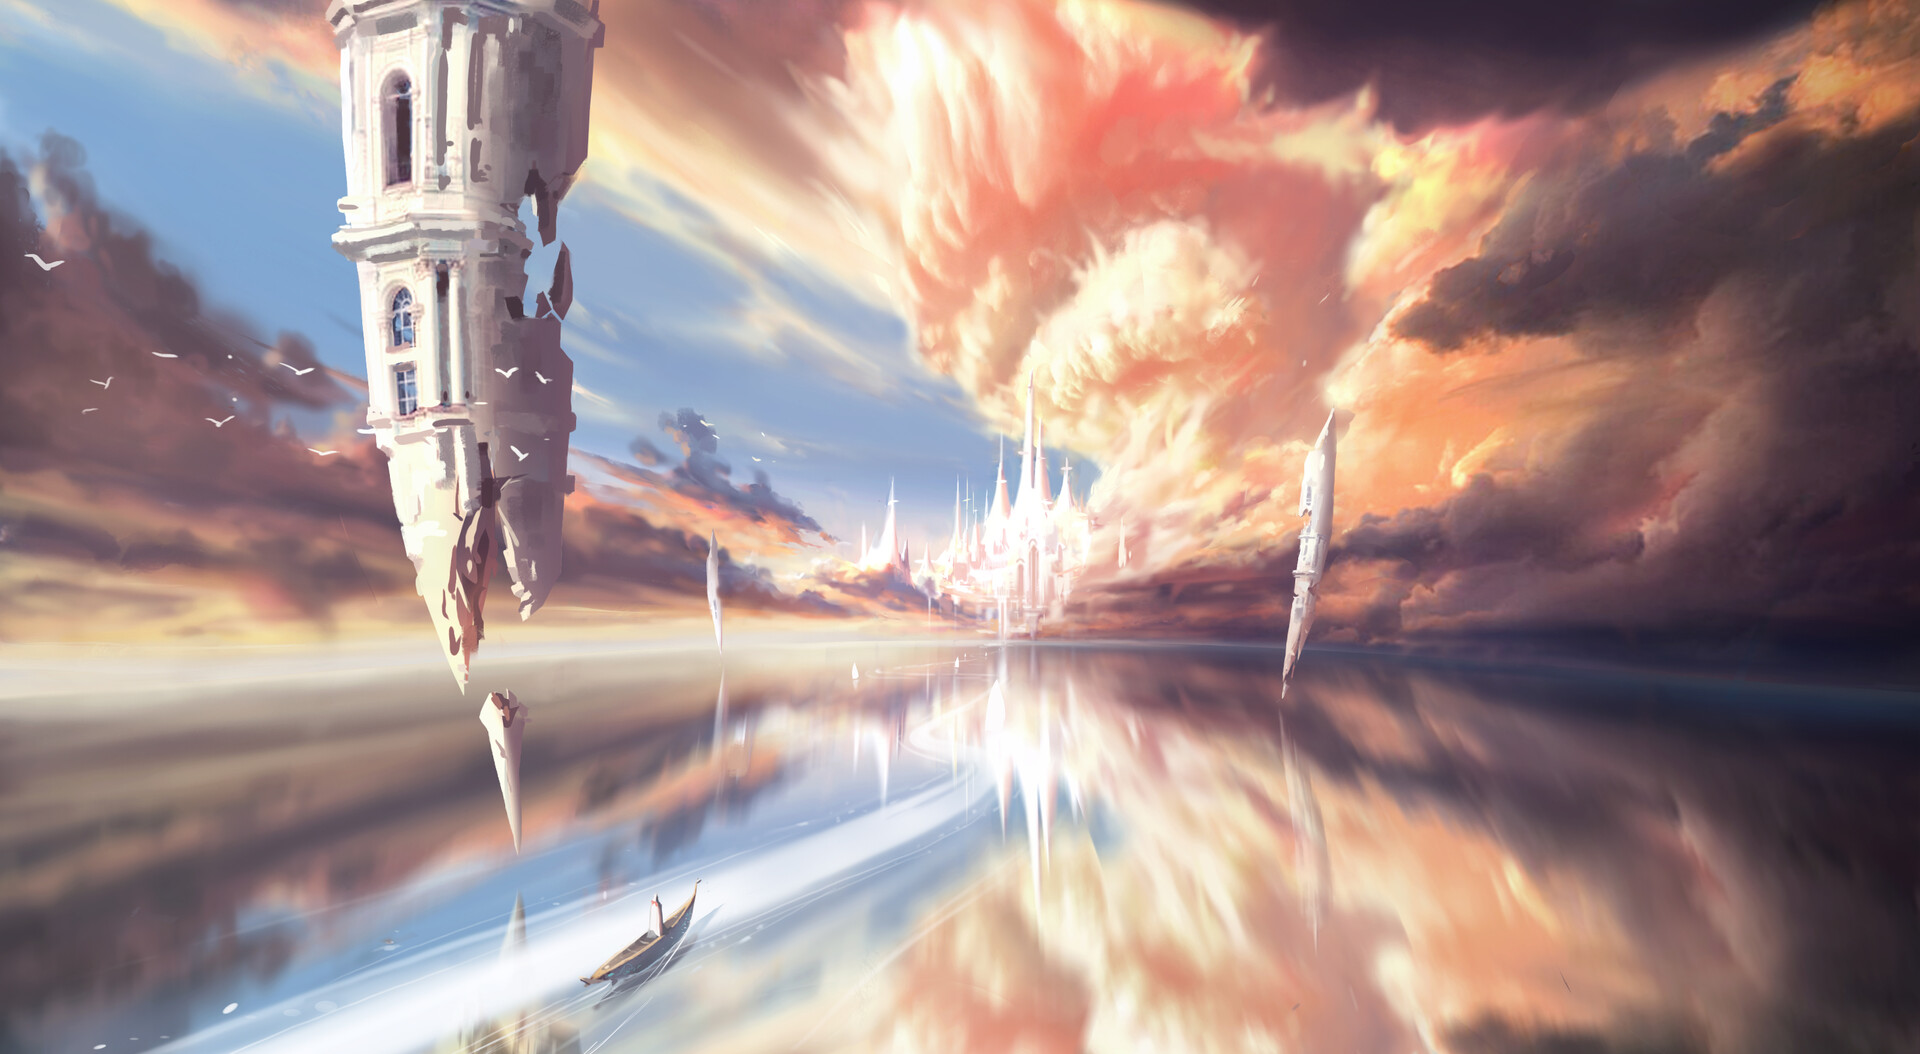 General 1920x1054 digital art fantasy art landscape clouds reflection castle boat